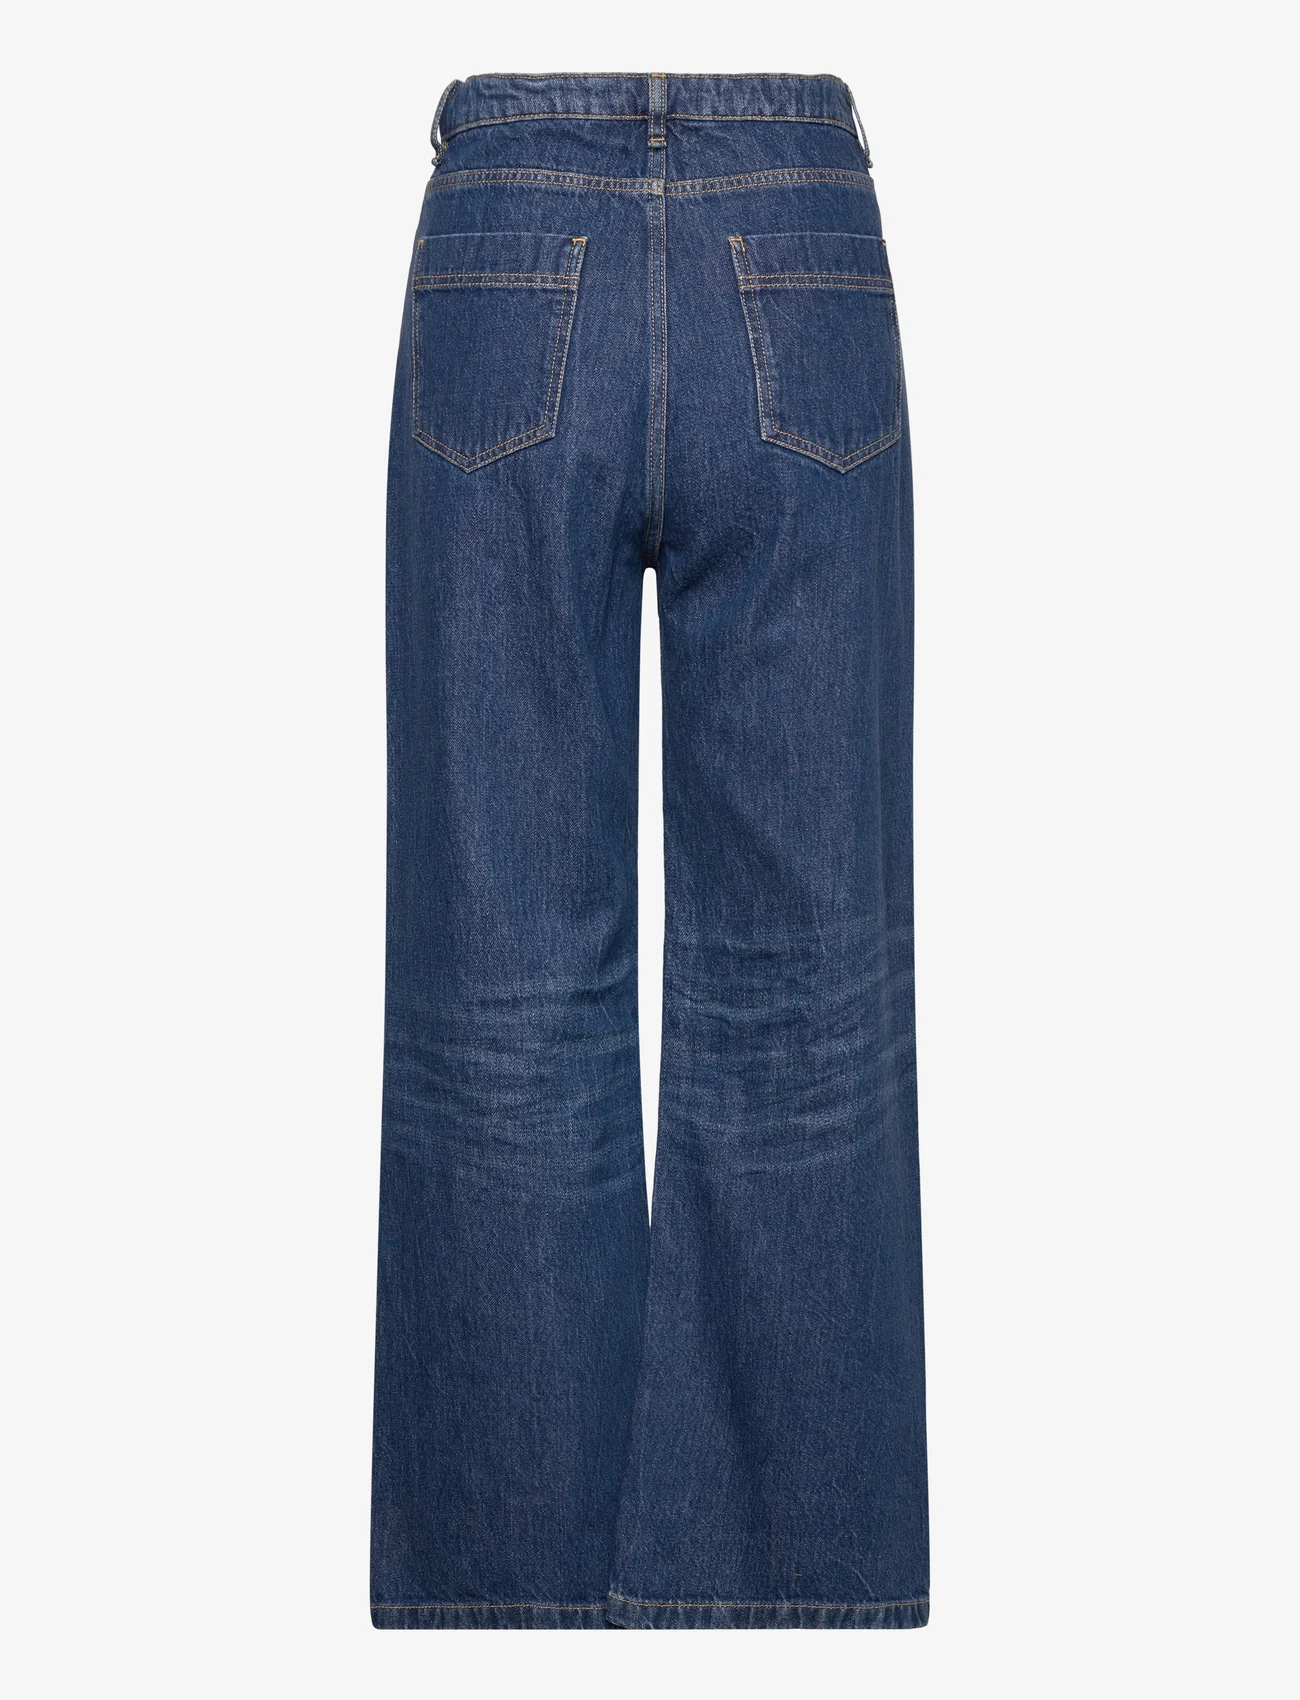 Wood Wood - Ellie Baggy Jeans - leveälahkeiset farkut - worn blue - 1